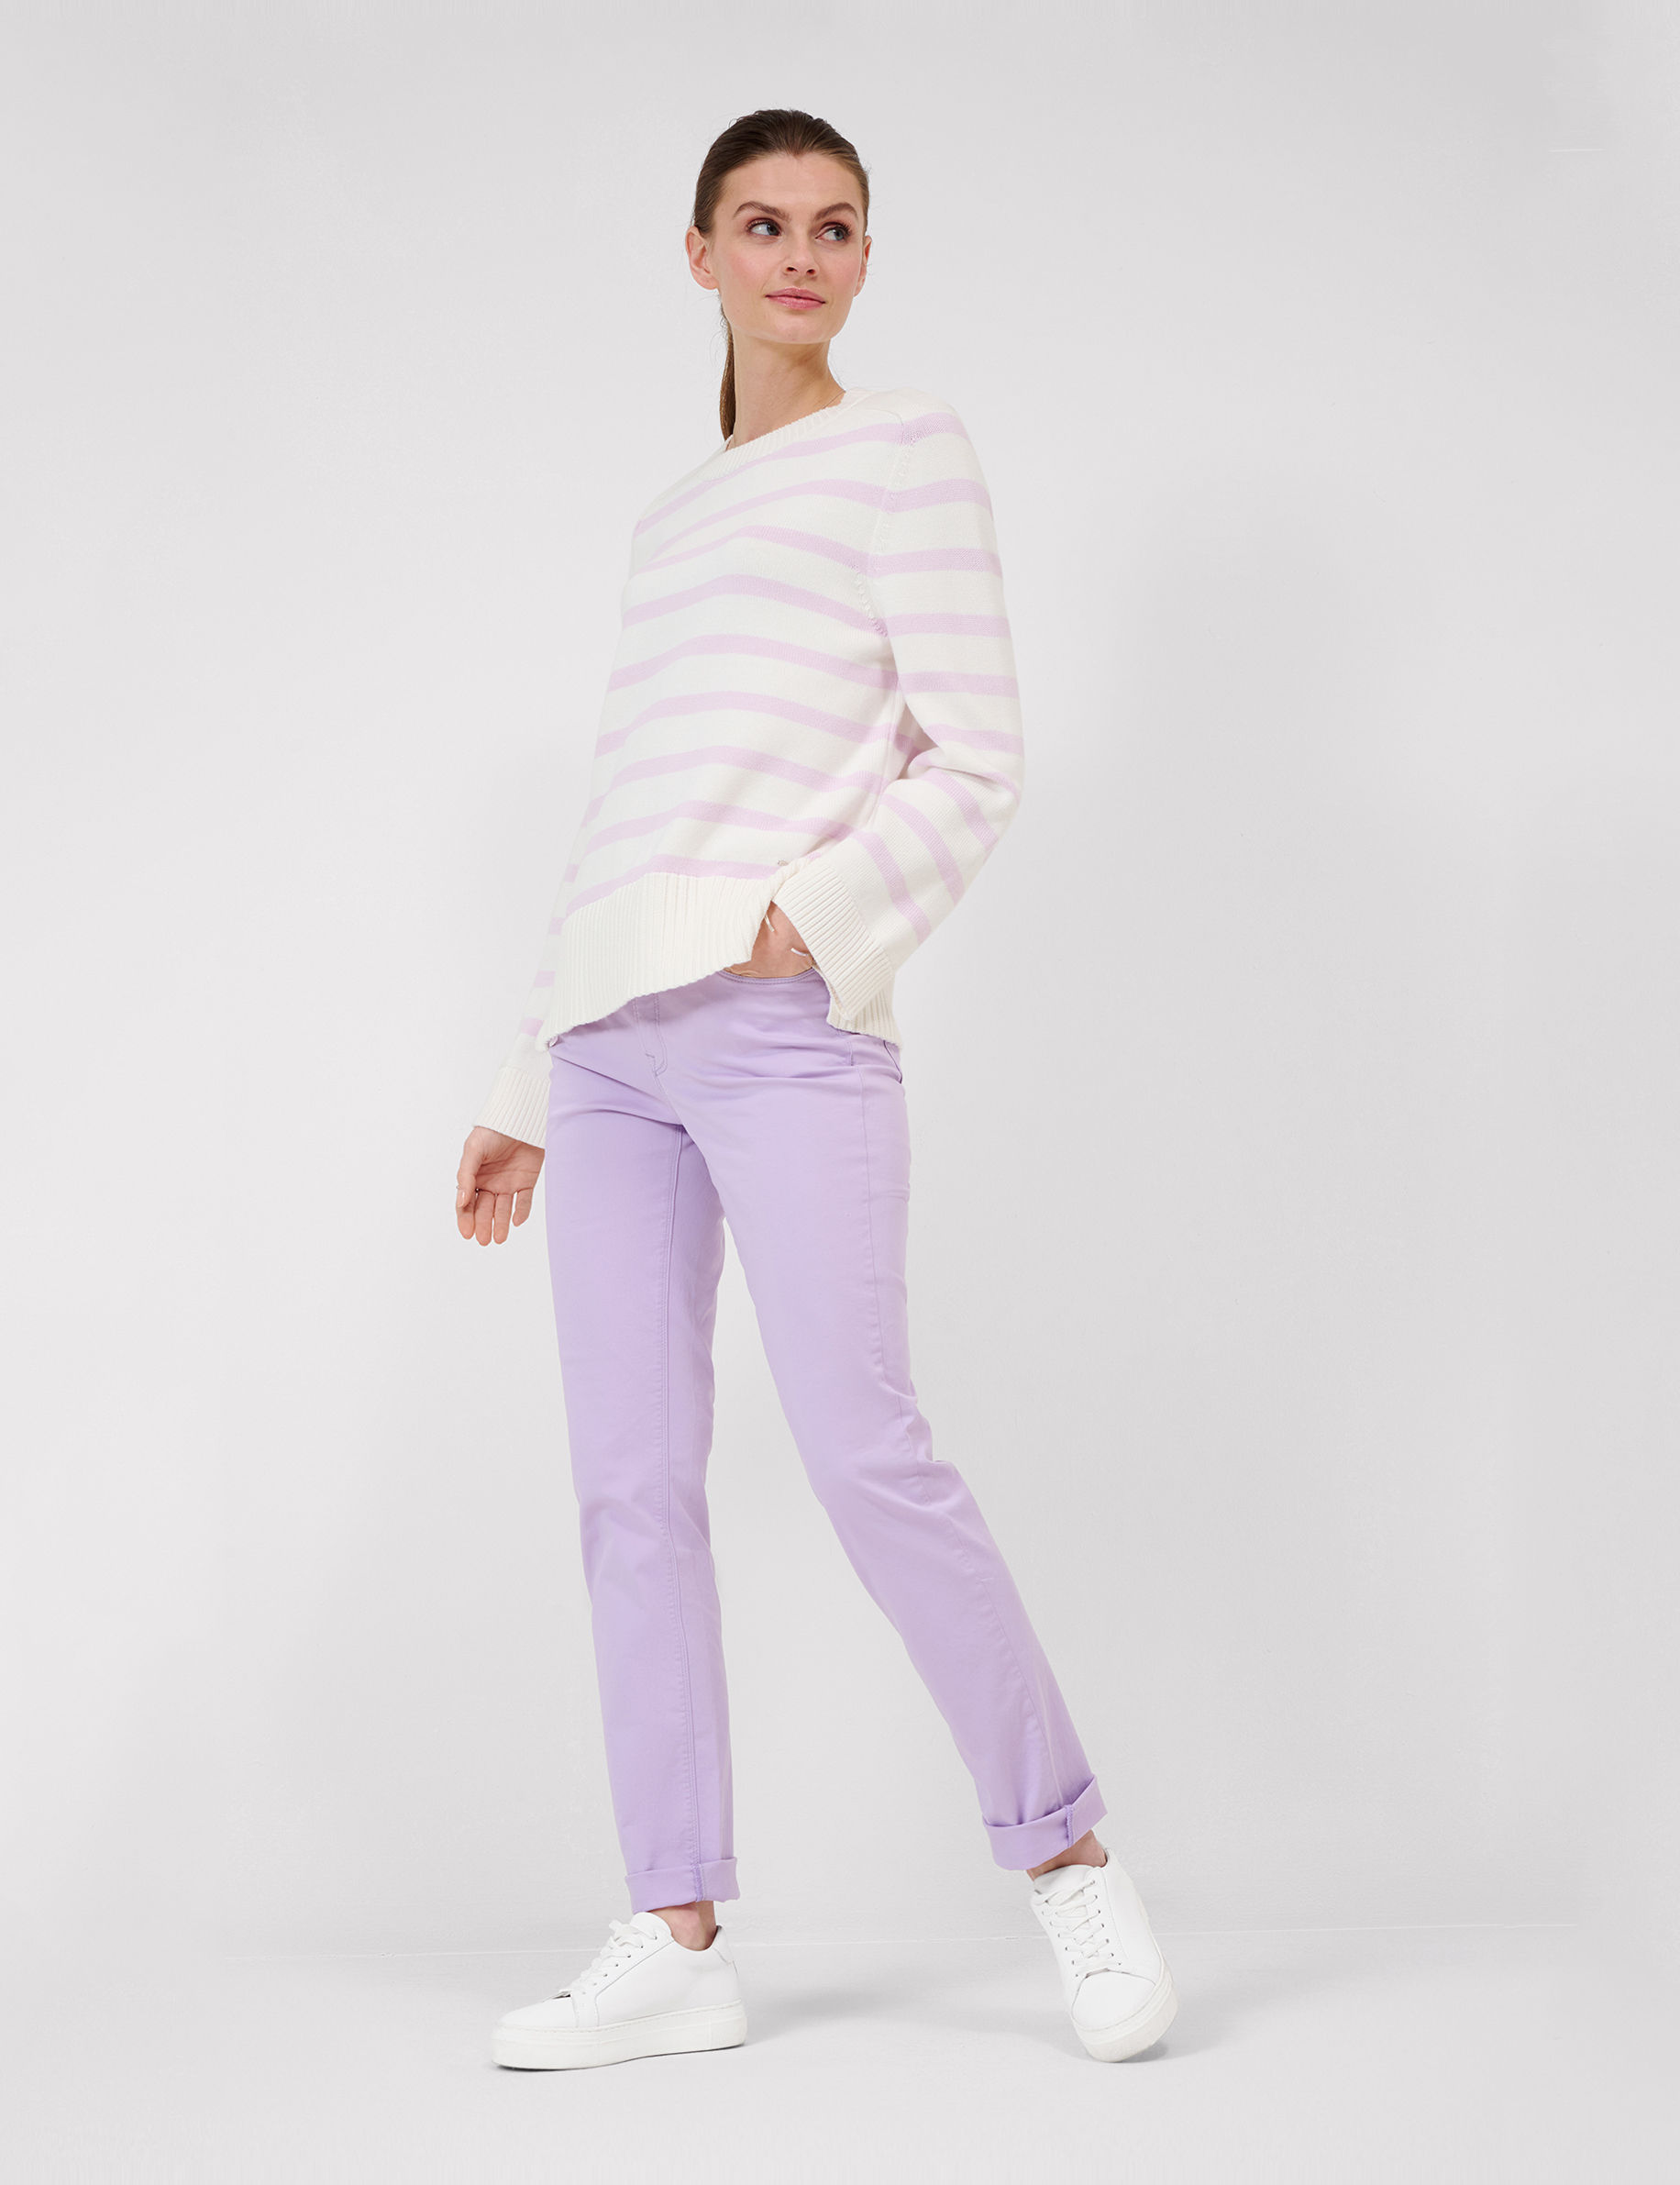 Women Style LIA soft purple  Model Outfit